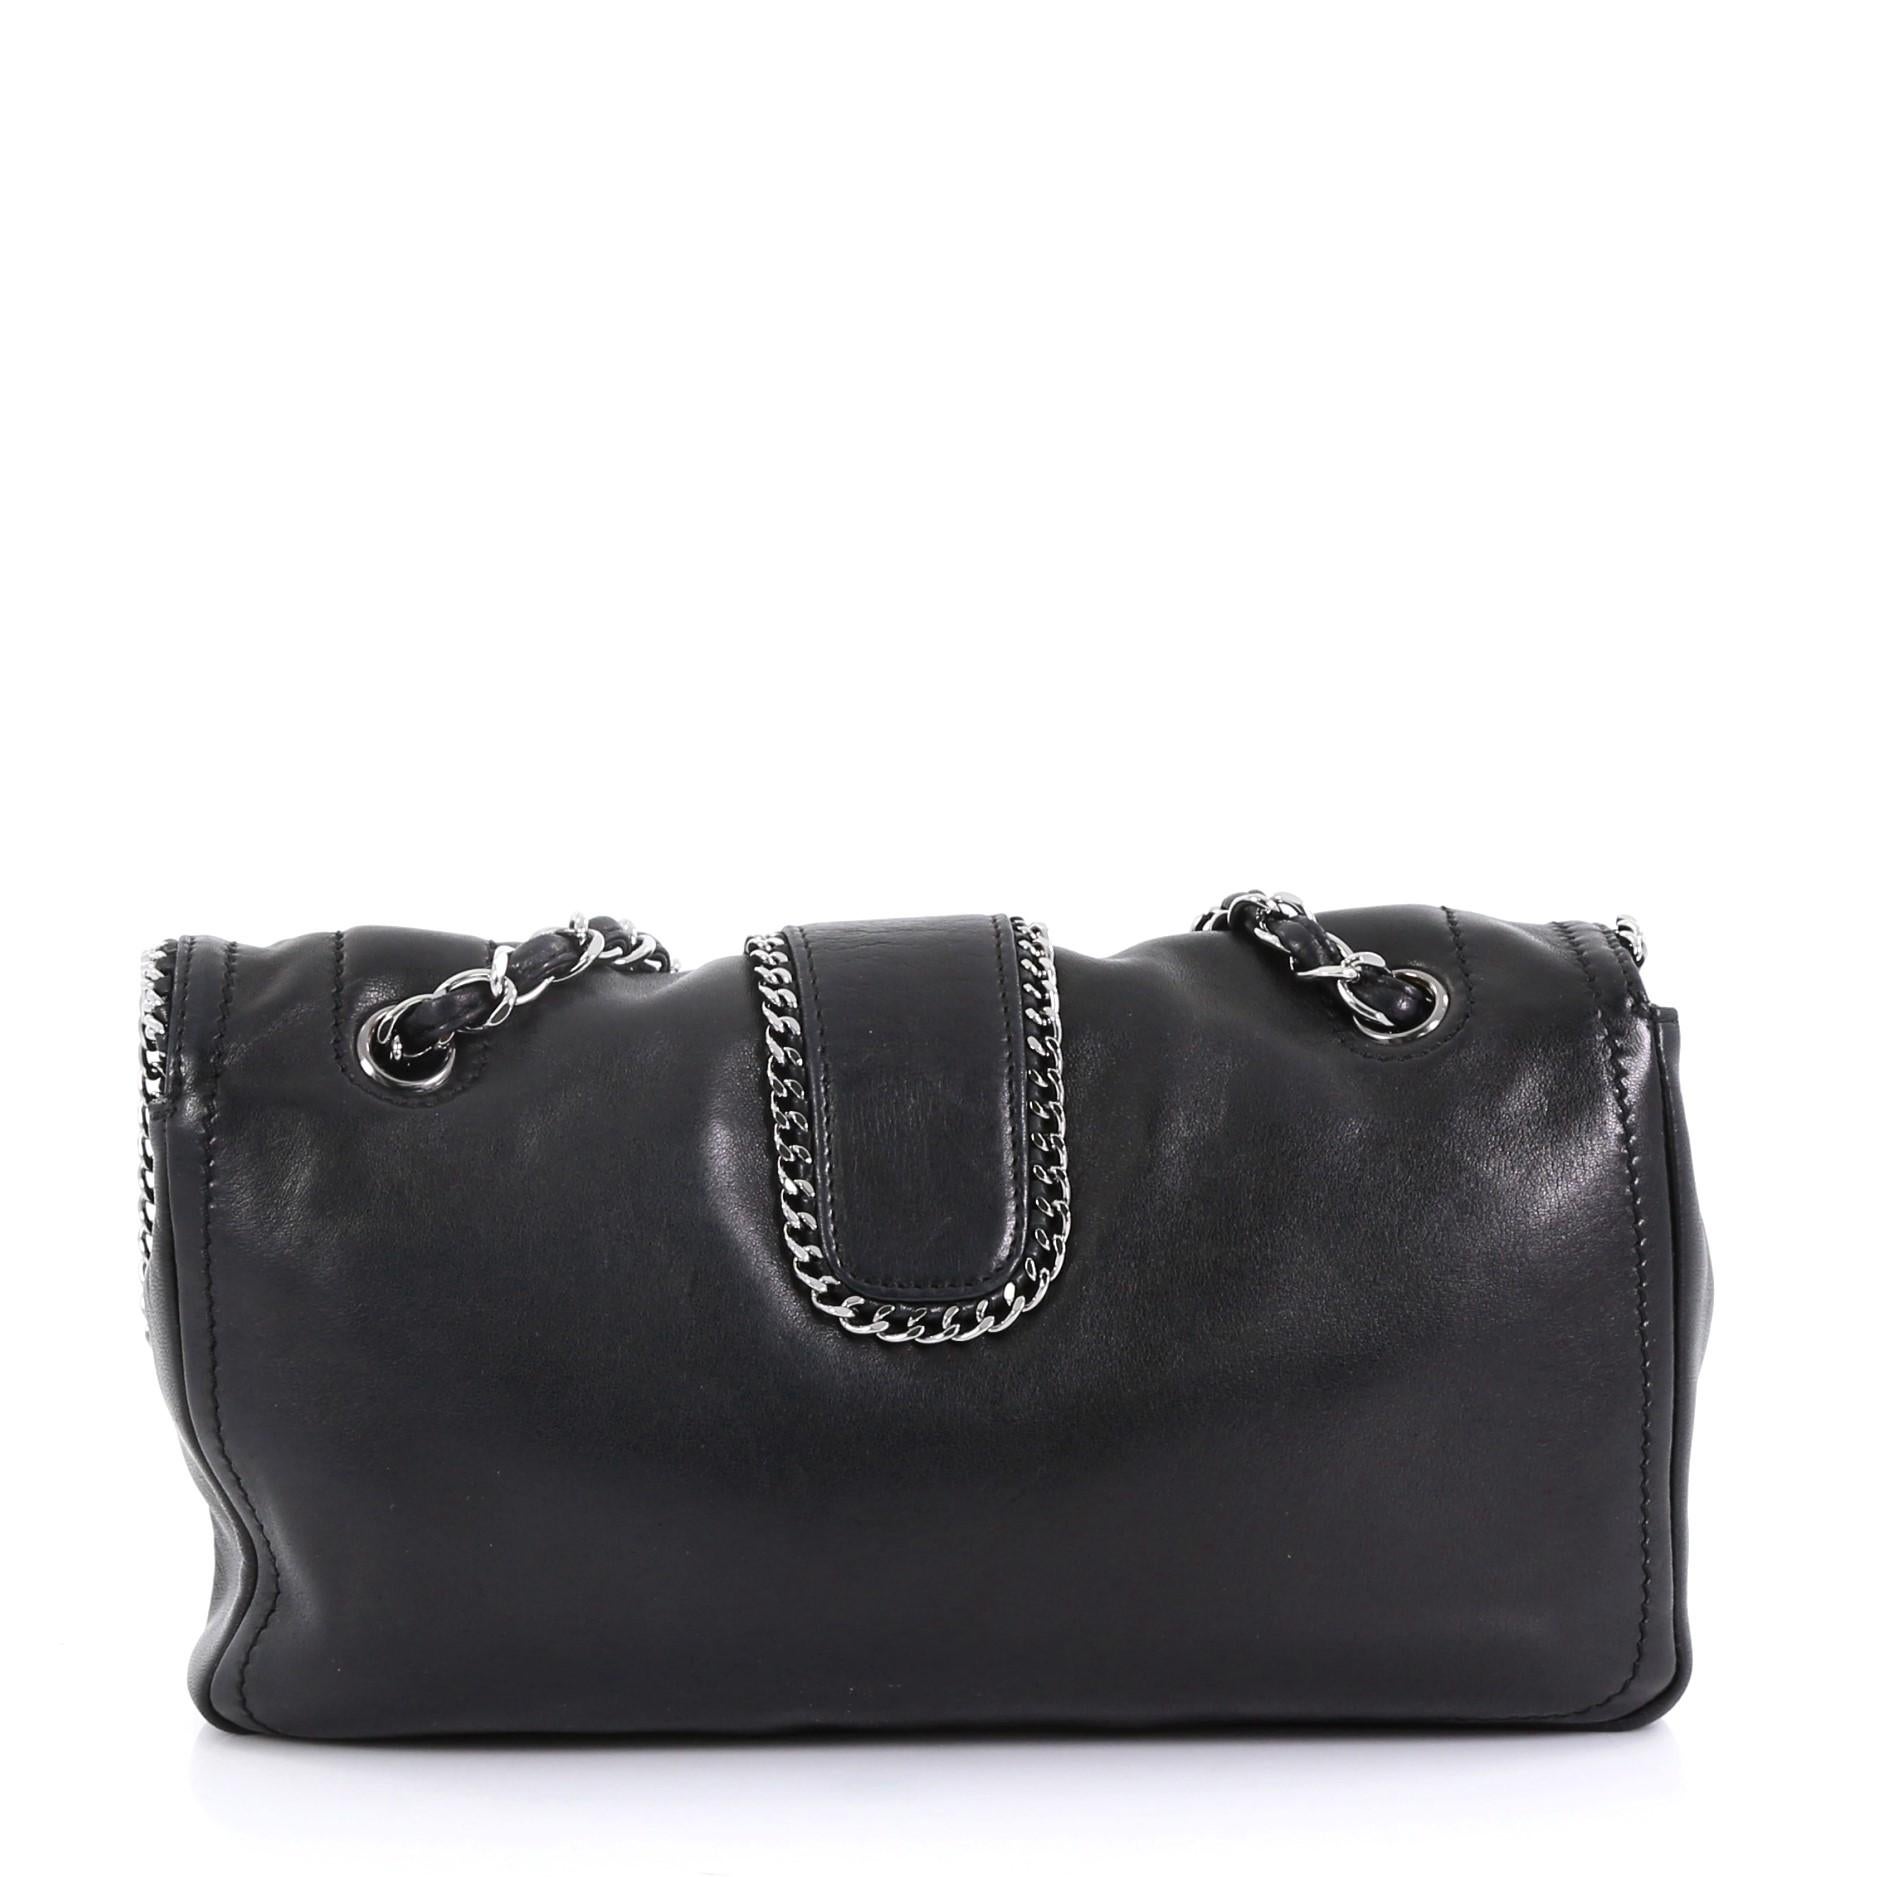 Black Chanel Madison Flap Bag Leather Medium